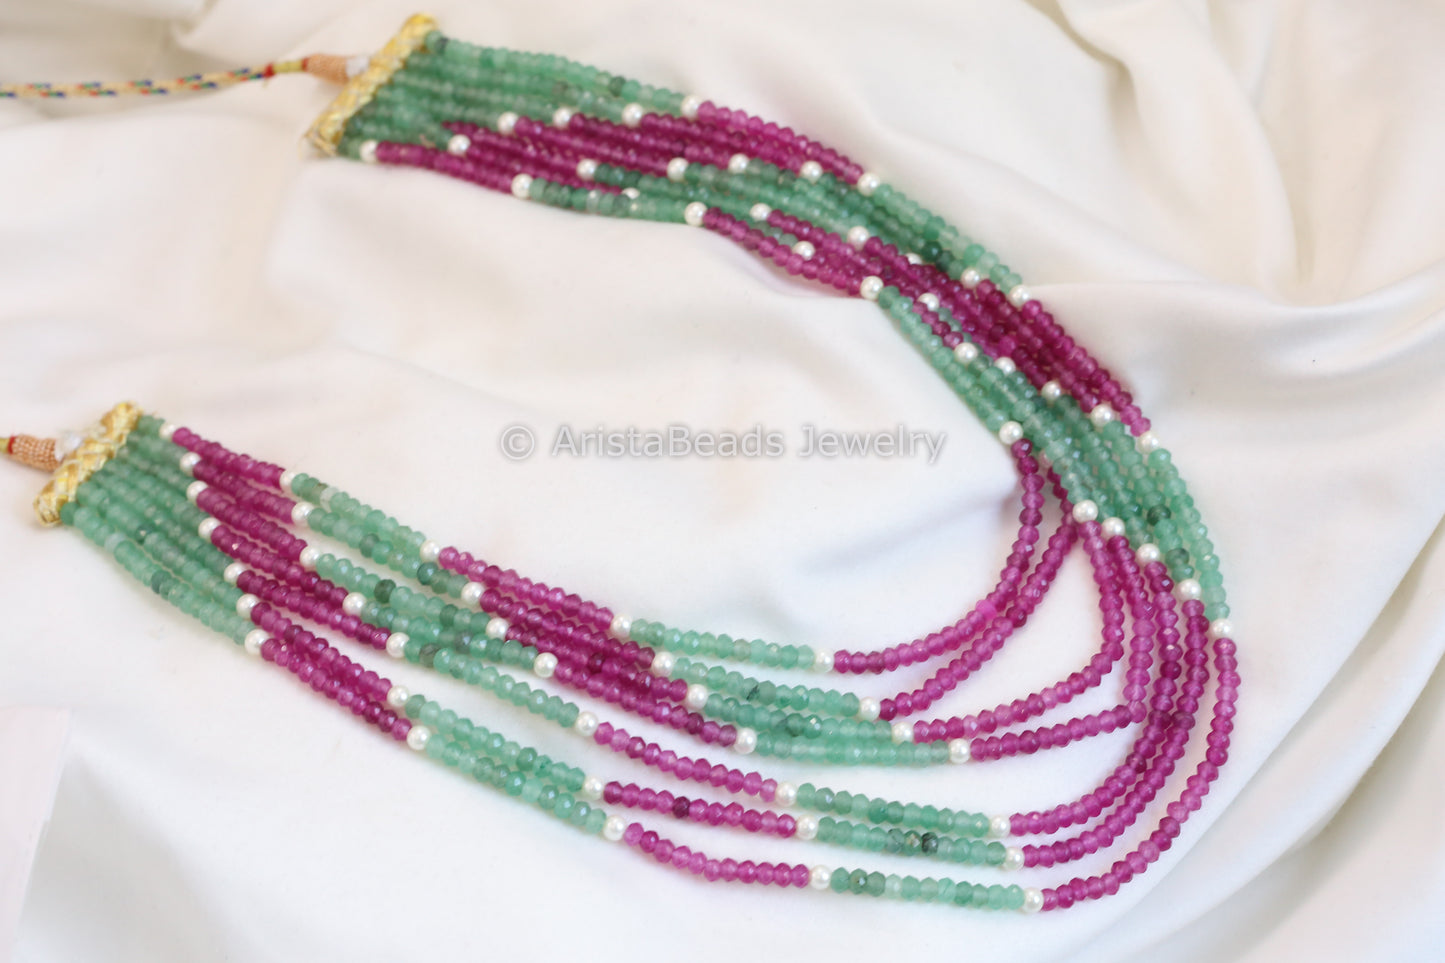 7 Strand Semiprecious Beads Necklace - Style 6